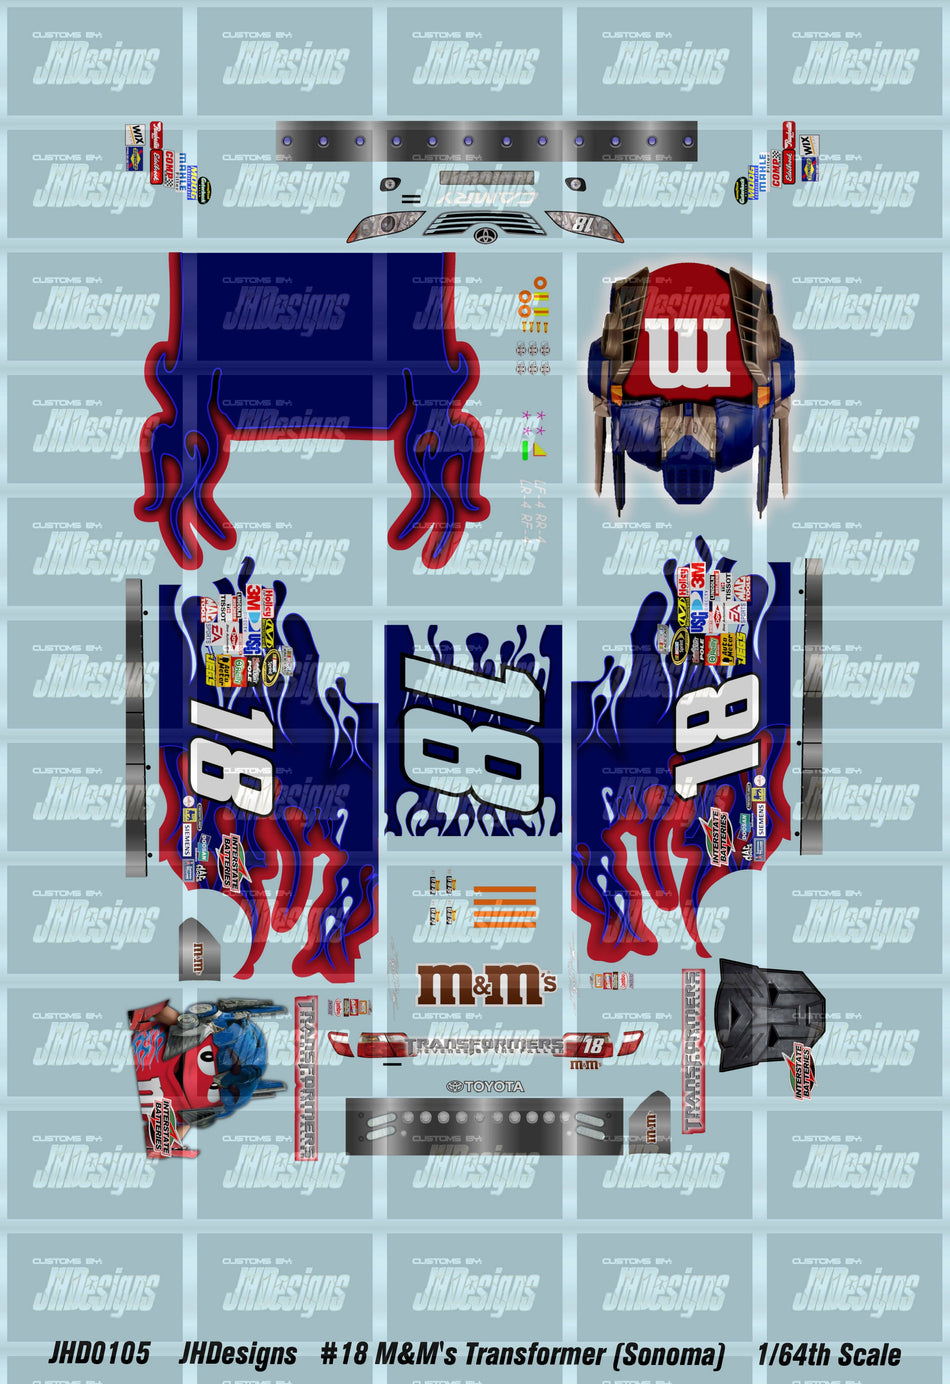 JH Designs Kyle Busch 2009 CUP #18 M&M's Transformers Revenge of the Fallen (Sonoma) 1:64 Racecar Decal Set